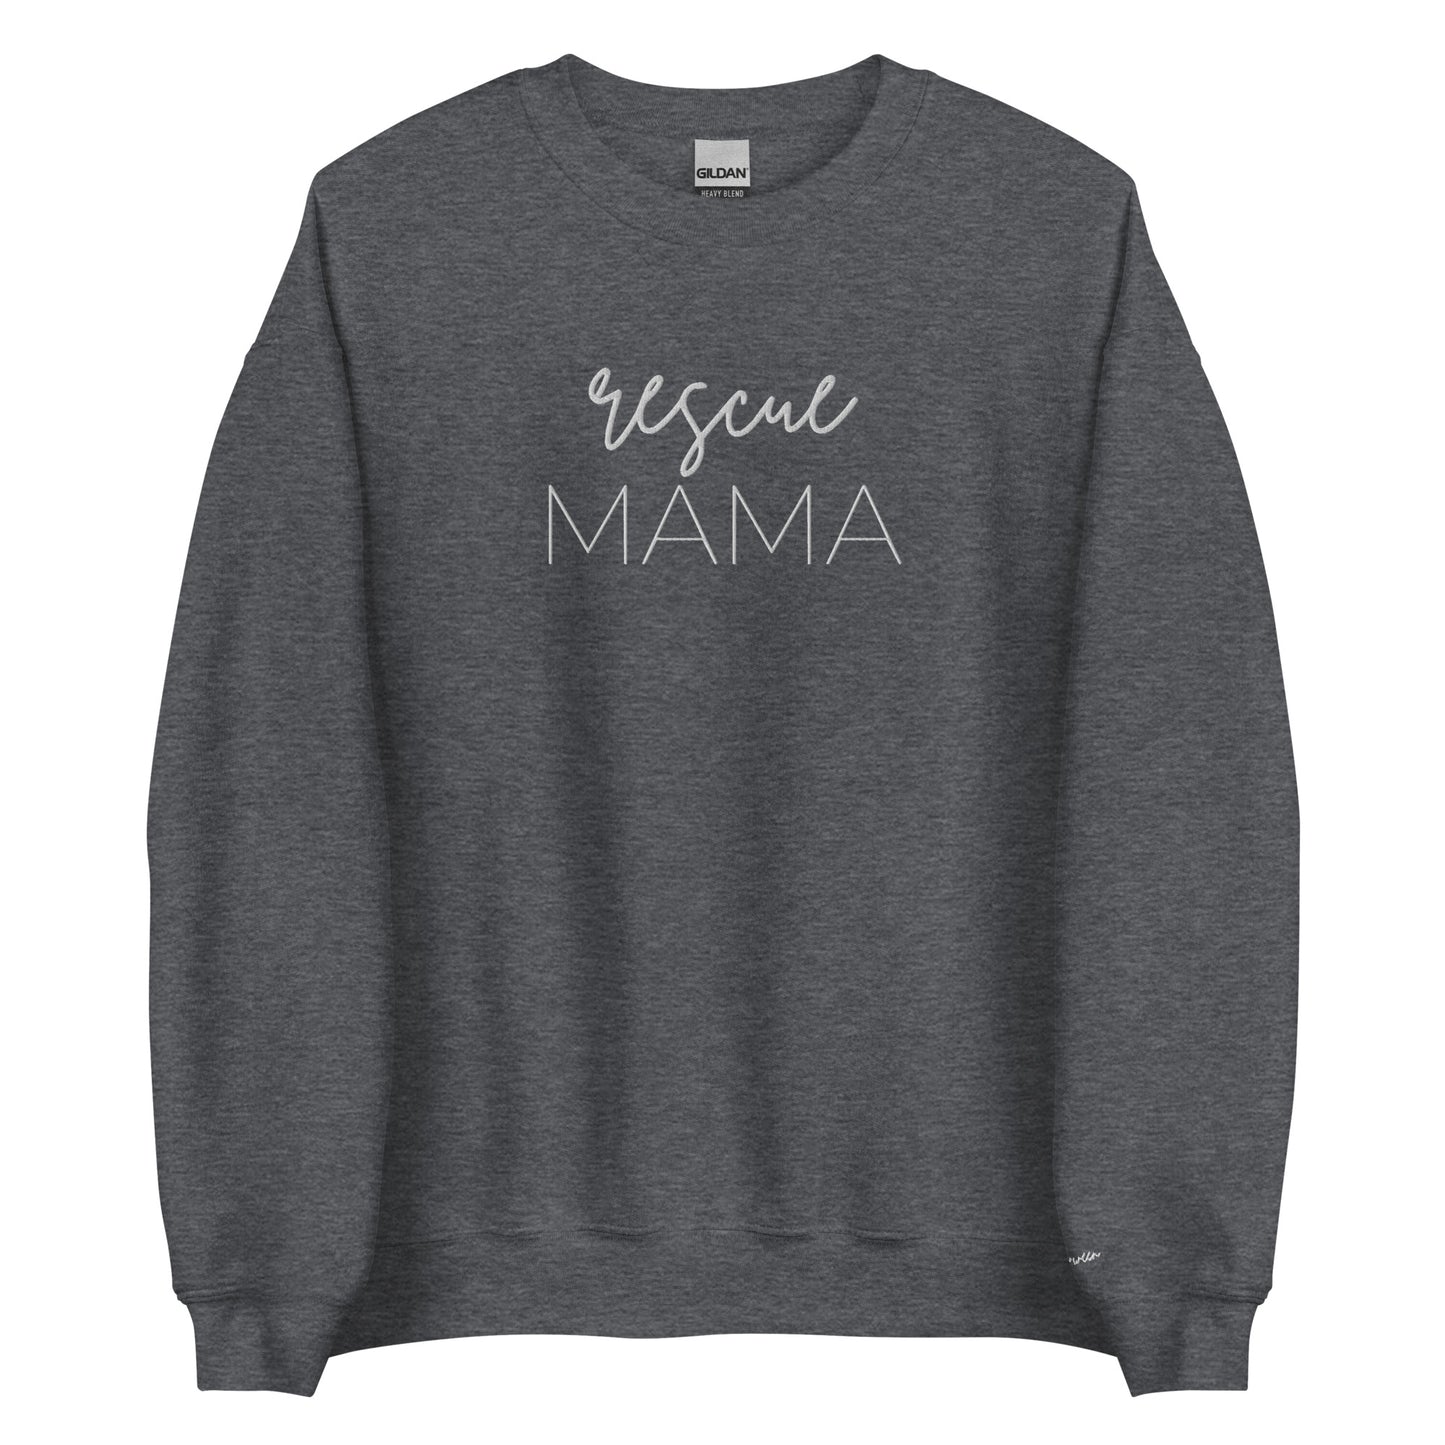 Embroidered Sweatshirt - RESCUE MAMA